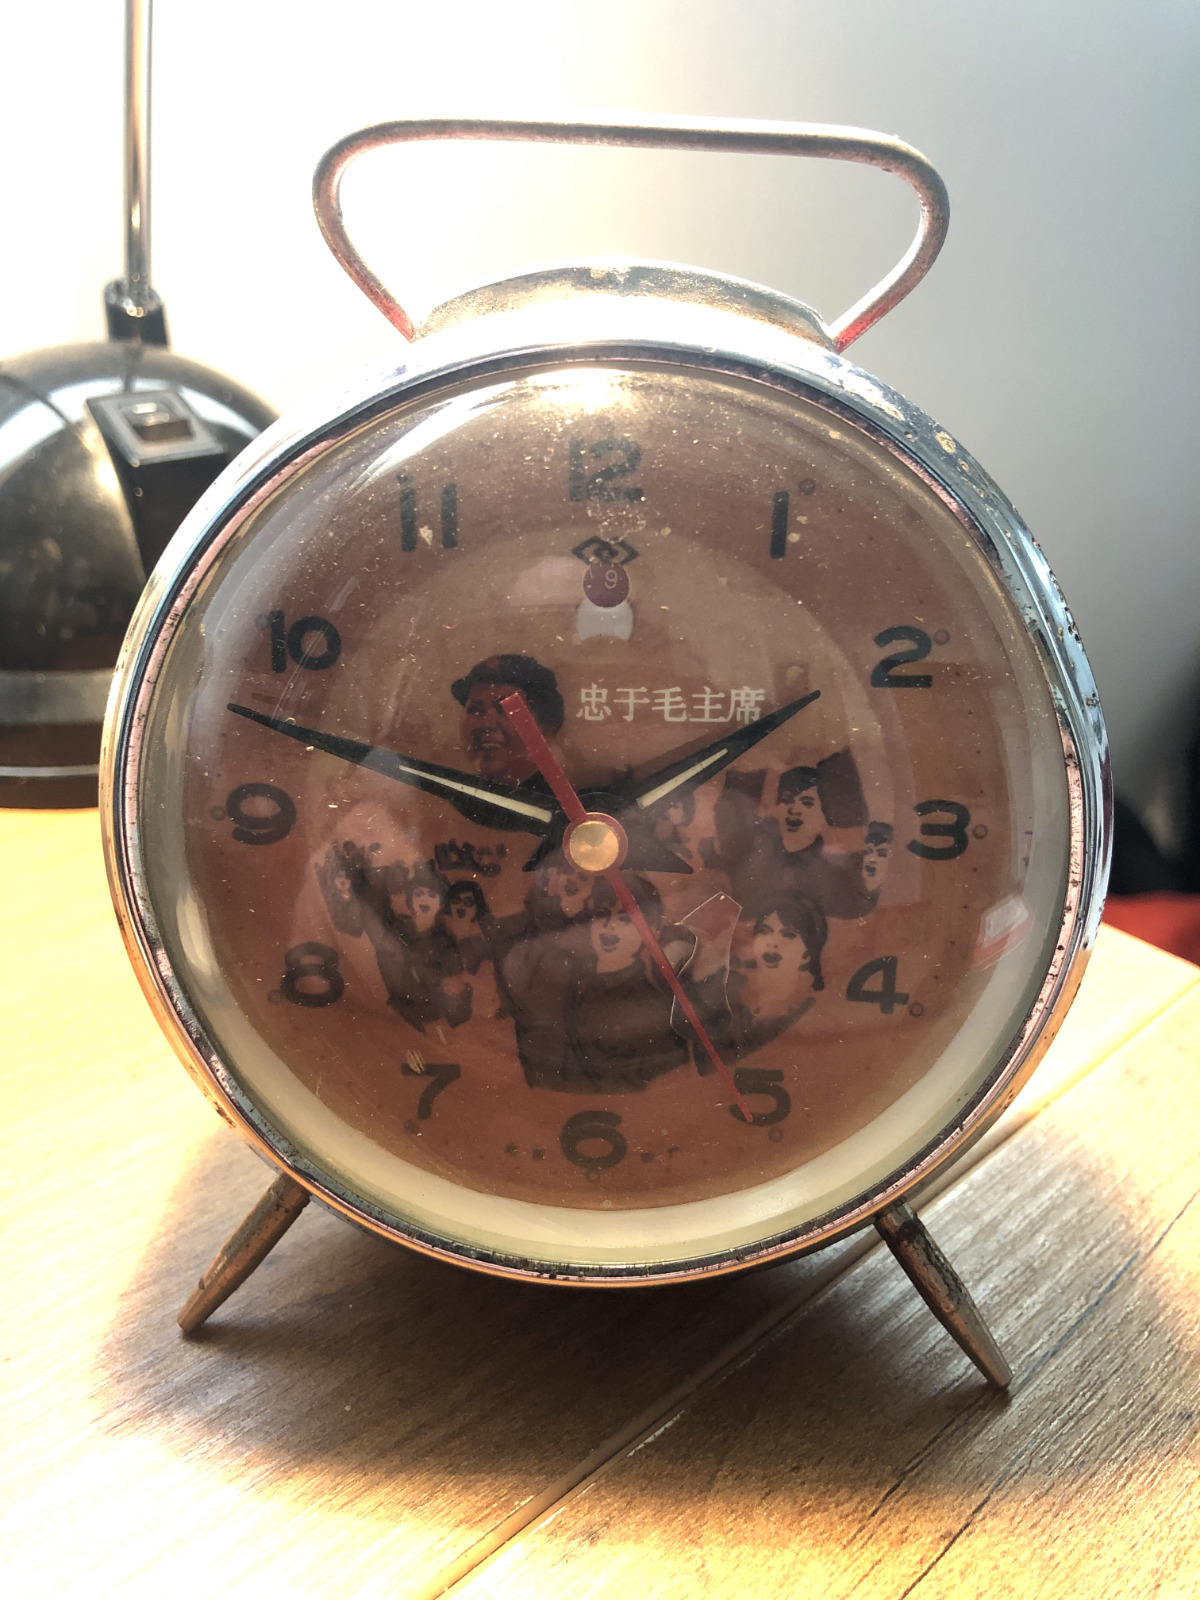 Vintage Chairman Mao China Communist Party Mechanical Metal Alarm Clock - 1950s